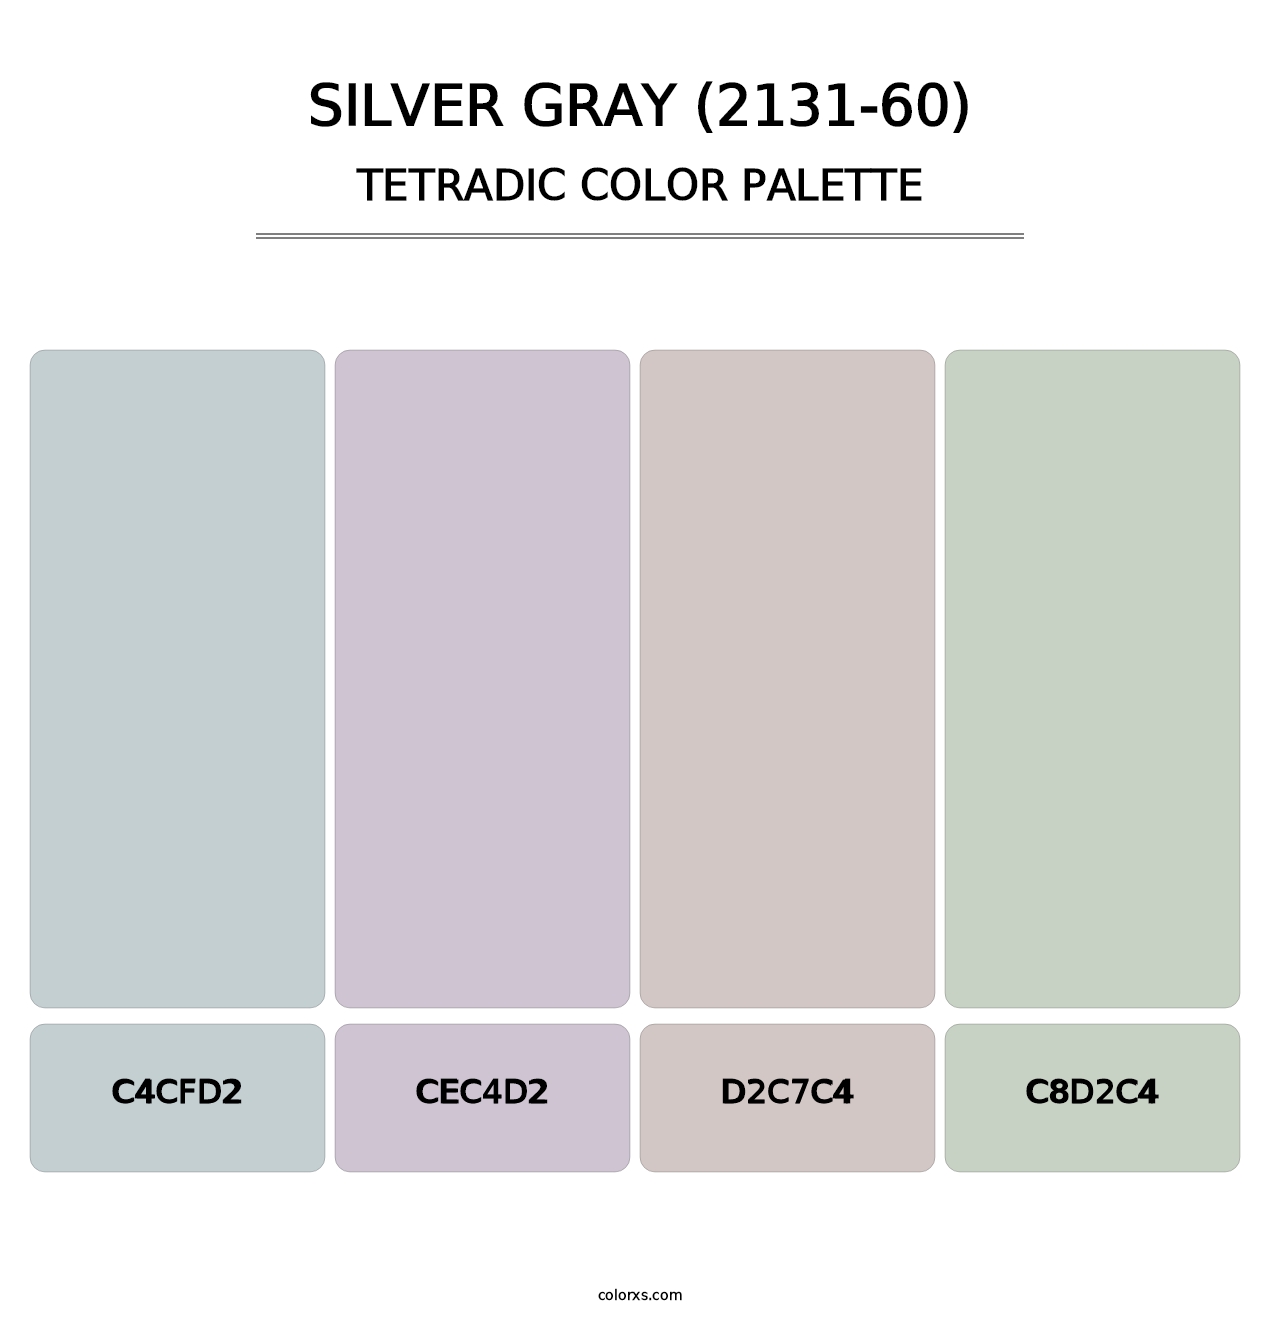 Silver Gray (2131-60) - Tetradic Color Palette